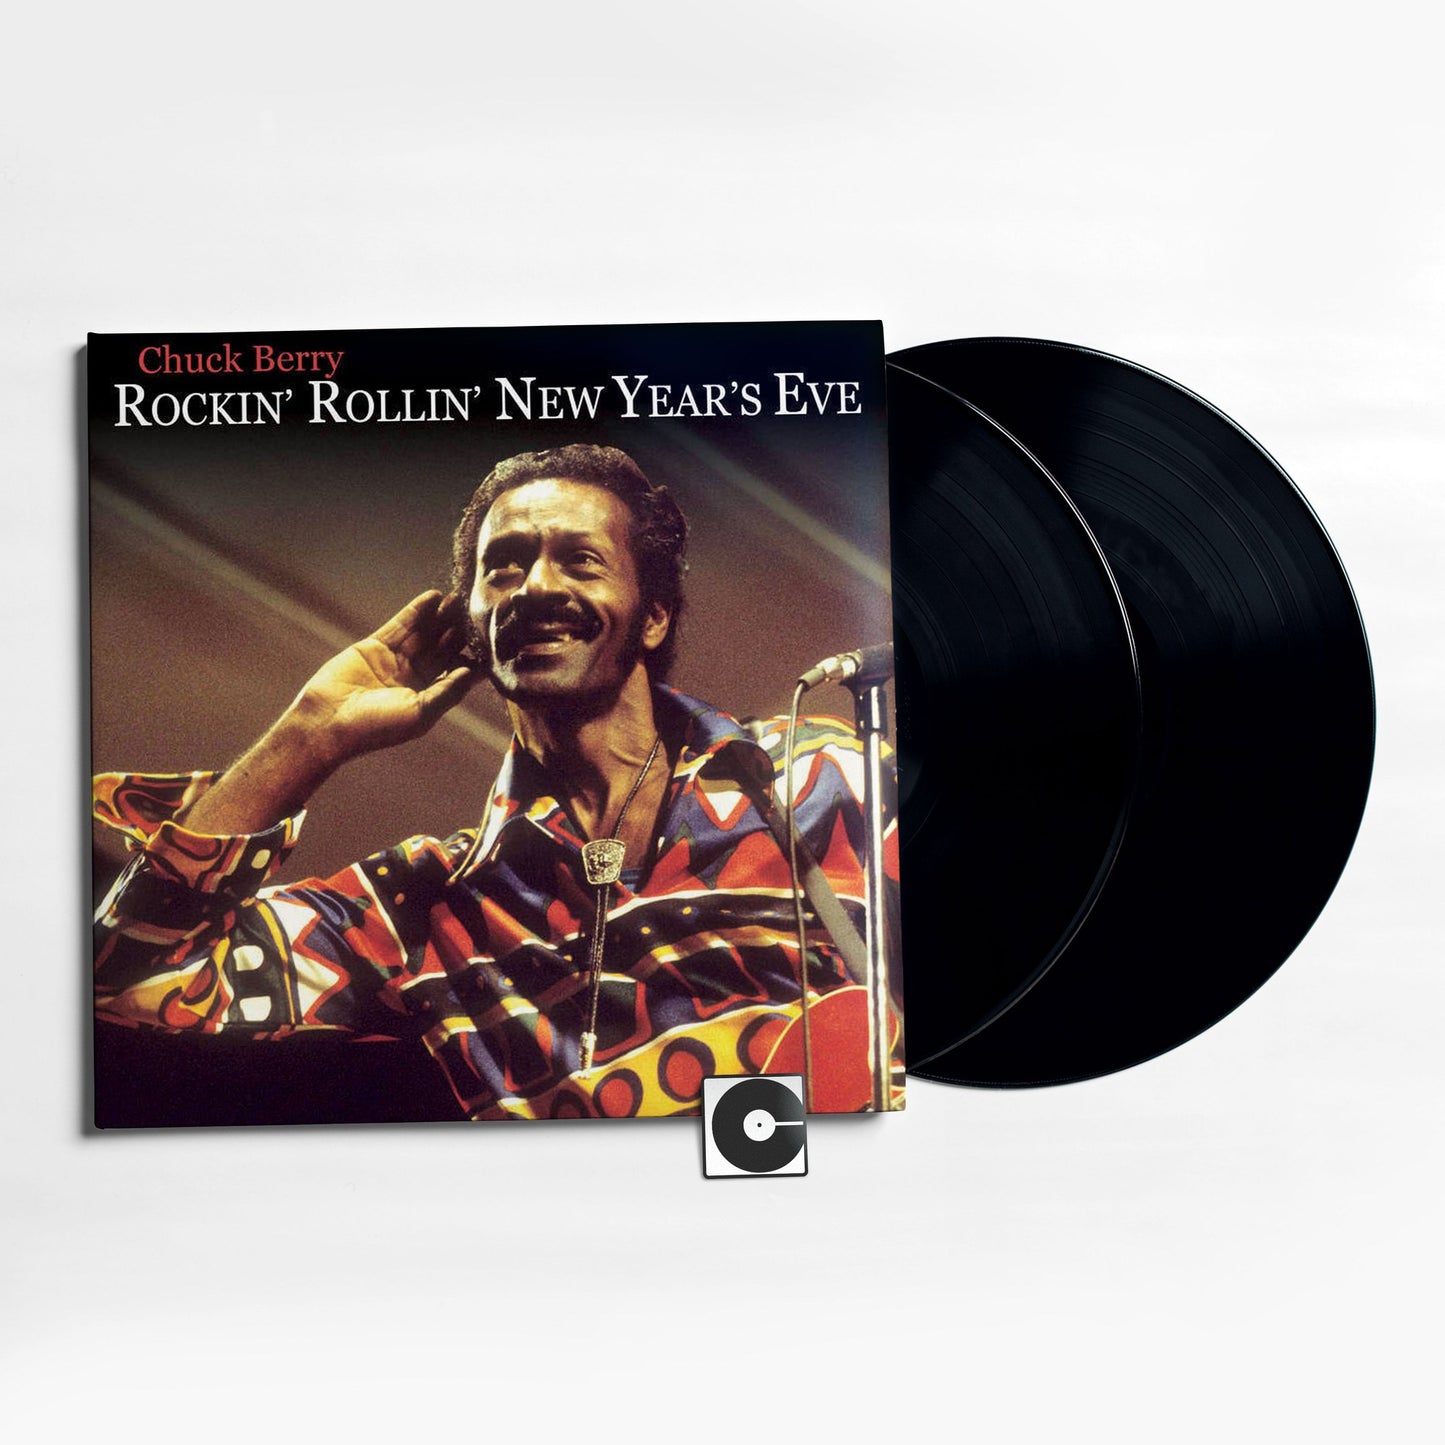 Chuck Berry - "Rockin' Rollin' New Year's Eve"